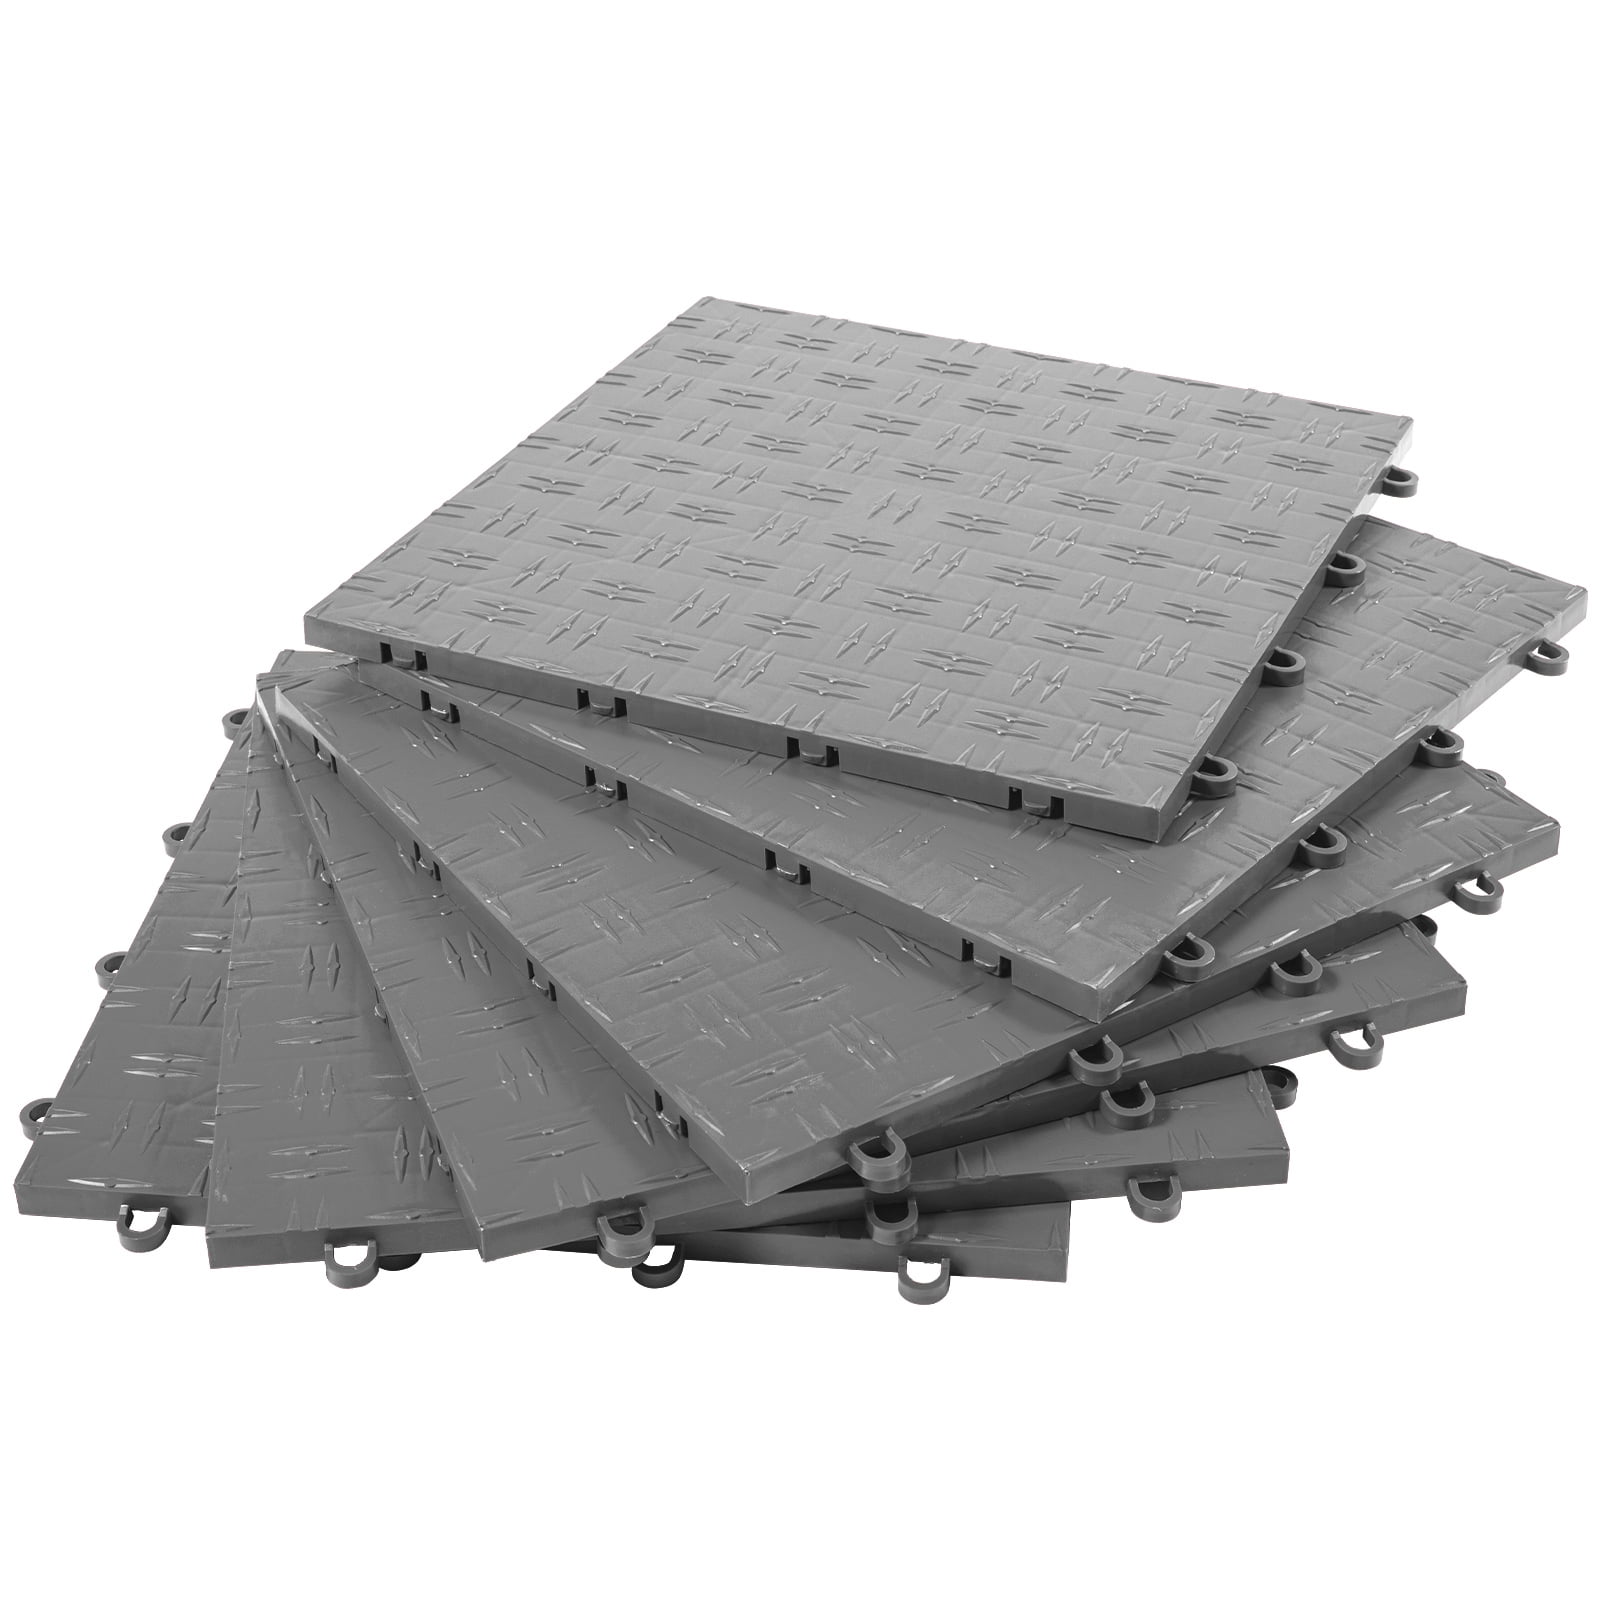 VEVOR Garage Tiles Interlocking 12 inchx12 inch Garage Floor Covering Tiles 50-Pack Black Diamond Garage Flooring Tiles Slide-Resistant Modular Garage